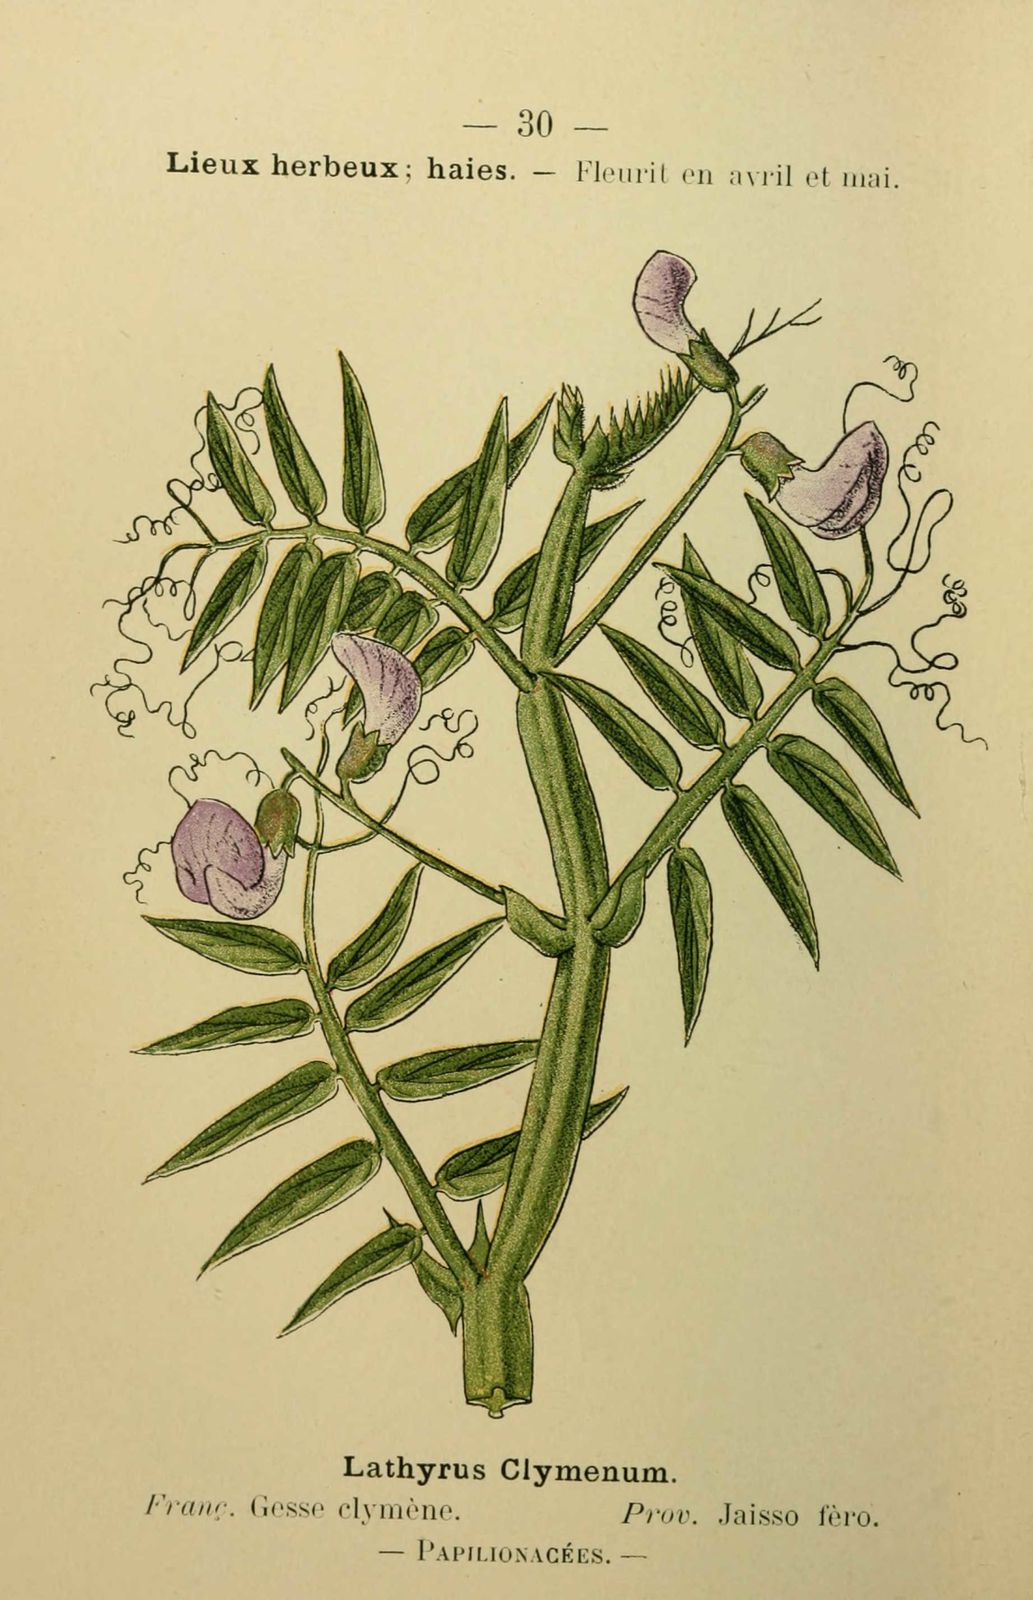 Dessin fleur méditerranée : gesse clymene - lathyrus clymenum